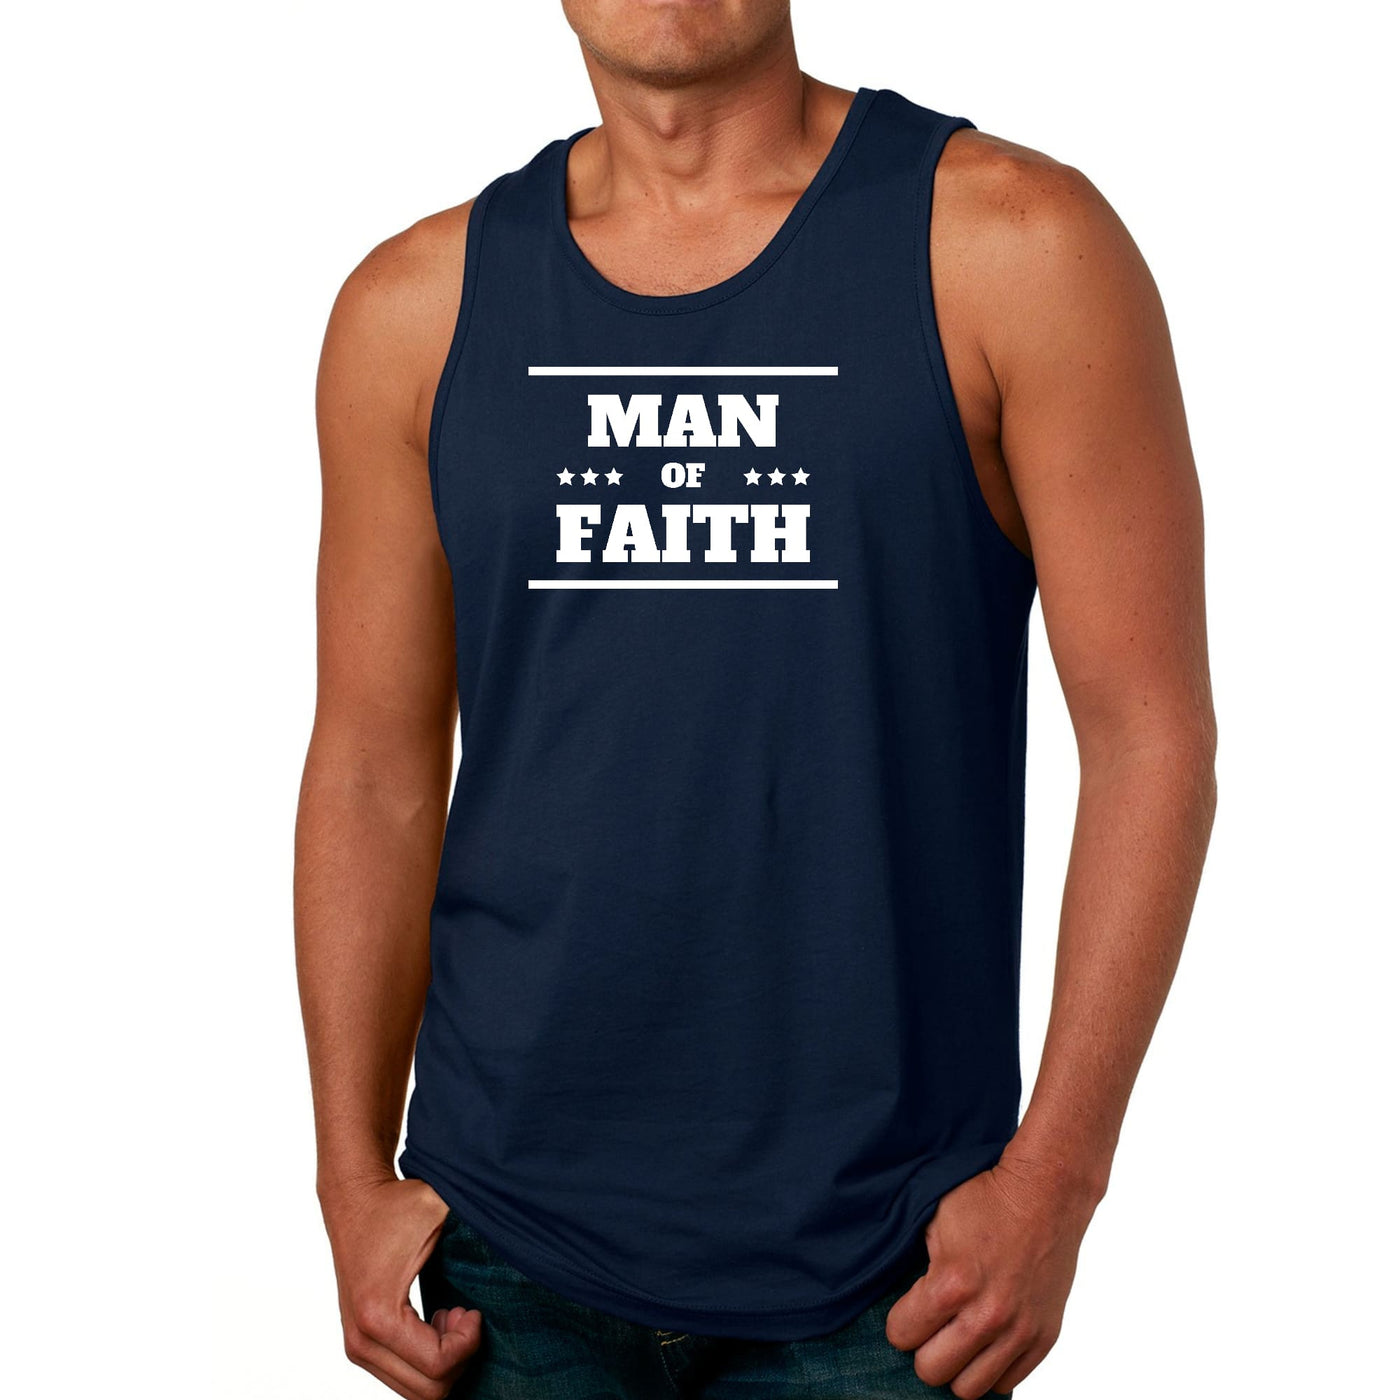 Mens Tank Top Fitness T - shirt Man Of Faith - Tops